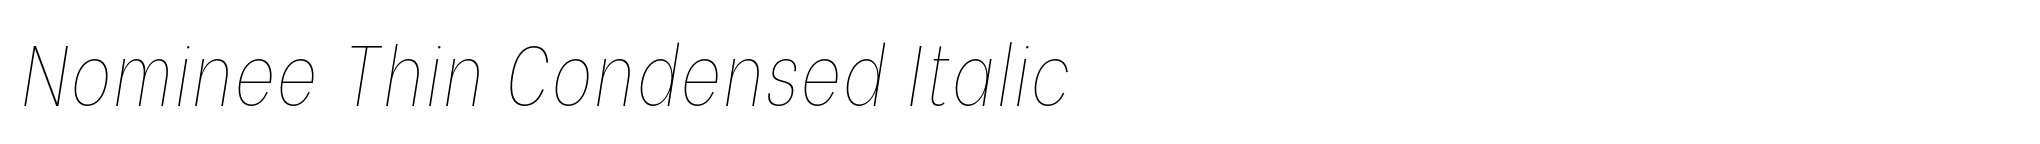 Nominee Thin Condensed Italic image